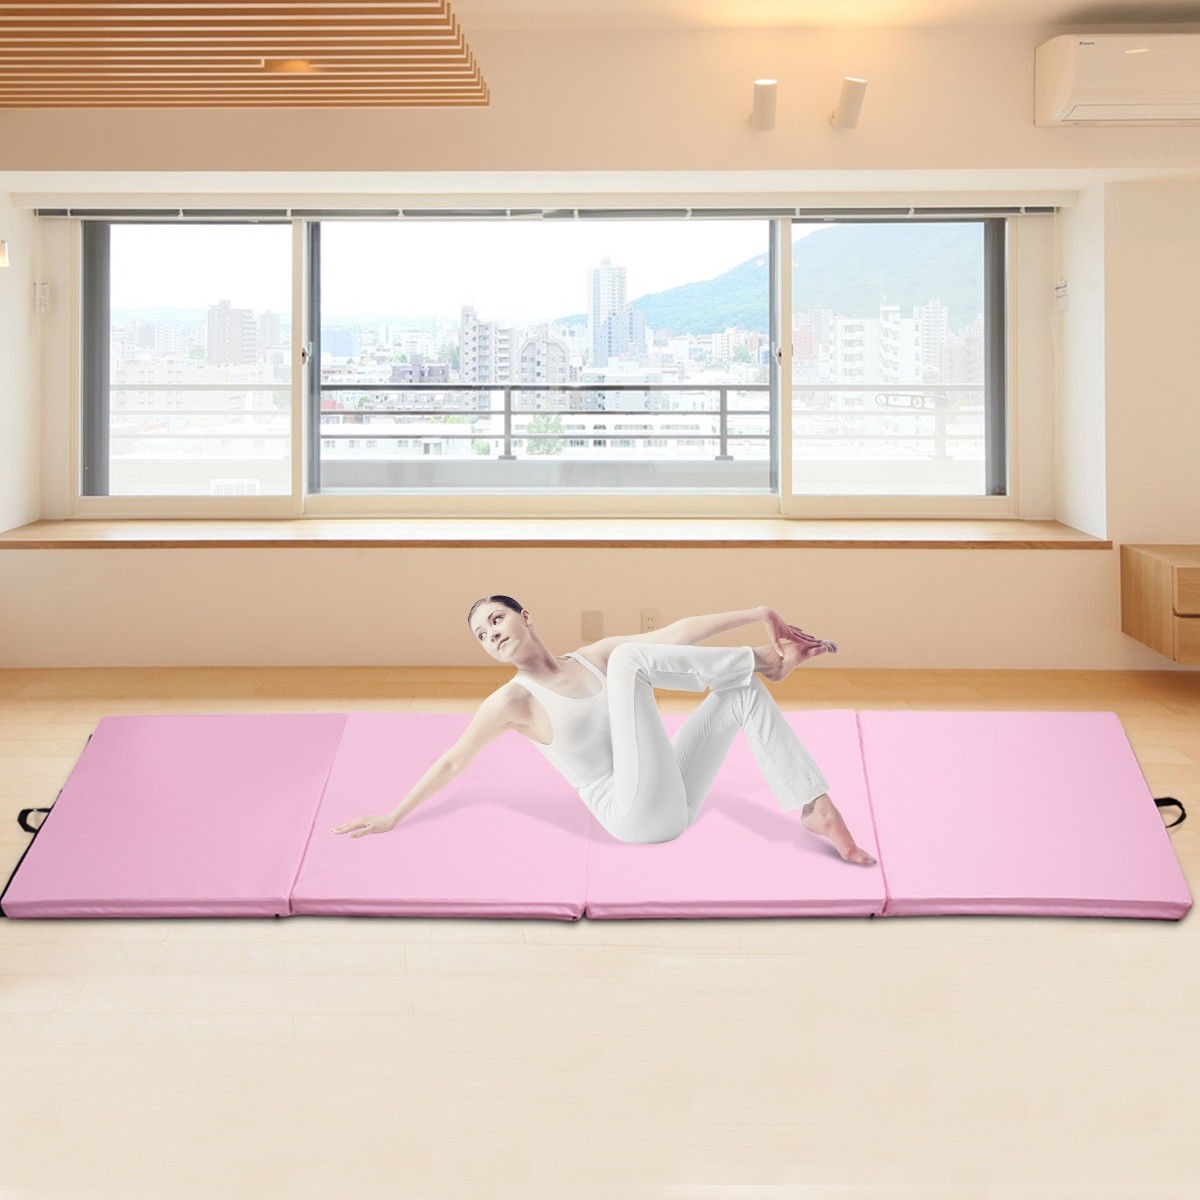 4 Ft. x 10 Ft. x 2 in. Thick Folding Panel Aerobics Exercise Gymnastics Mat